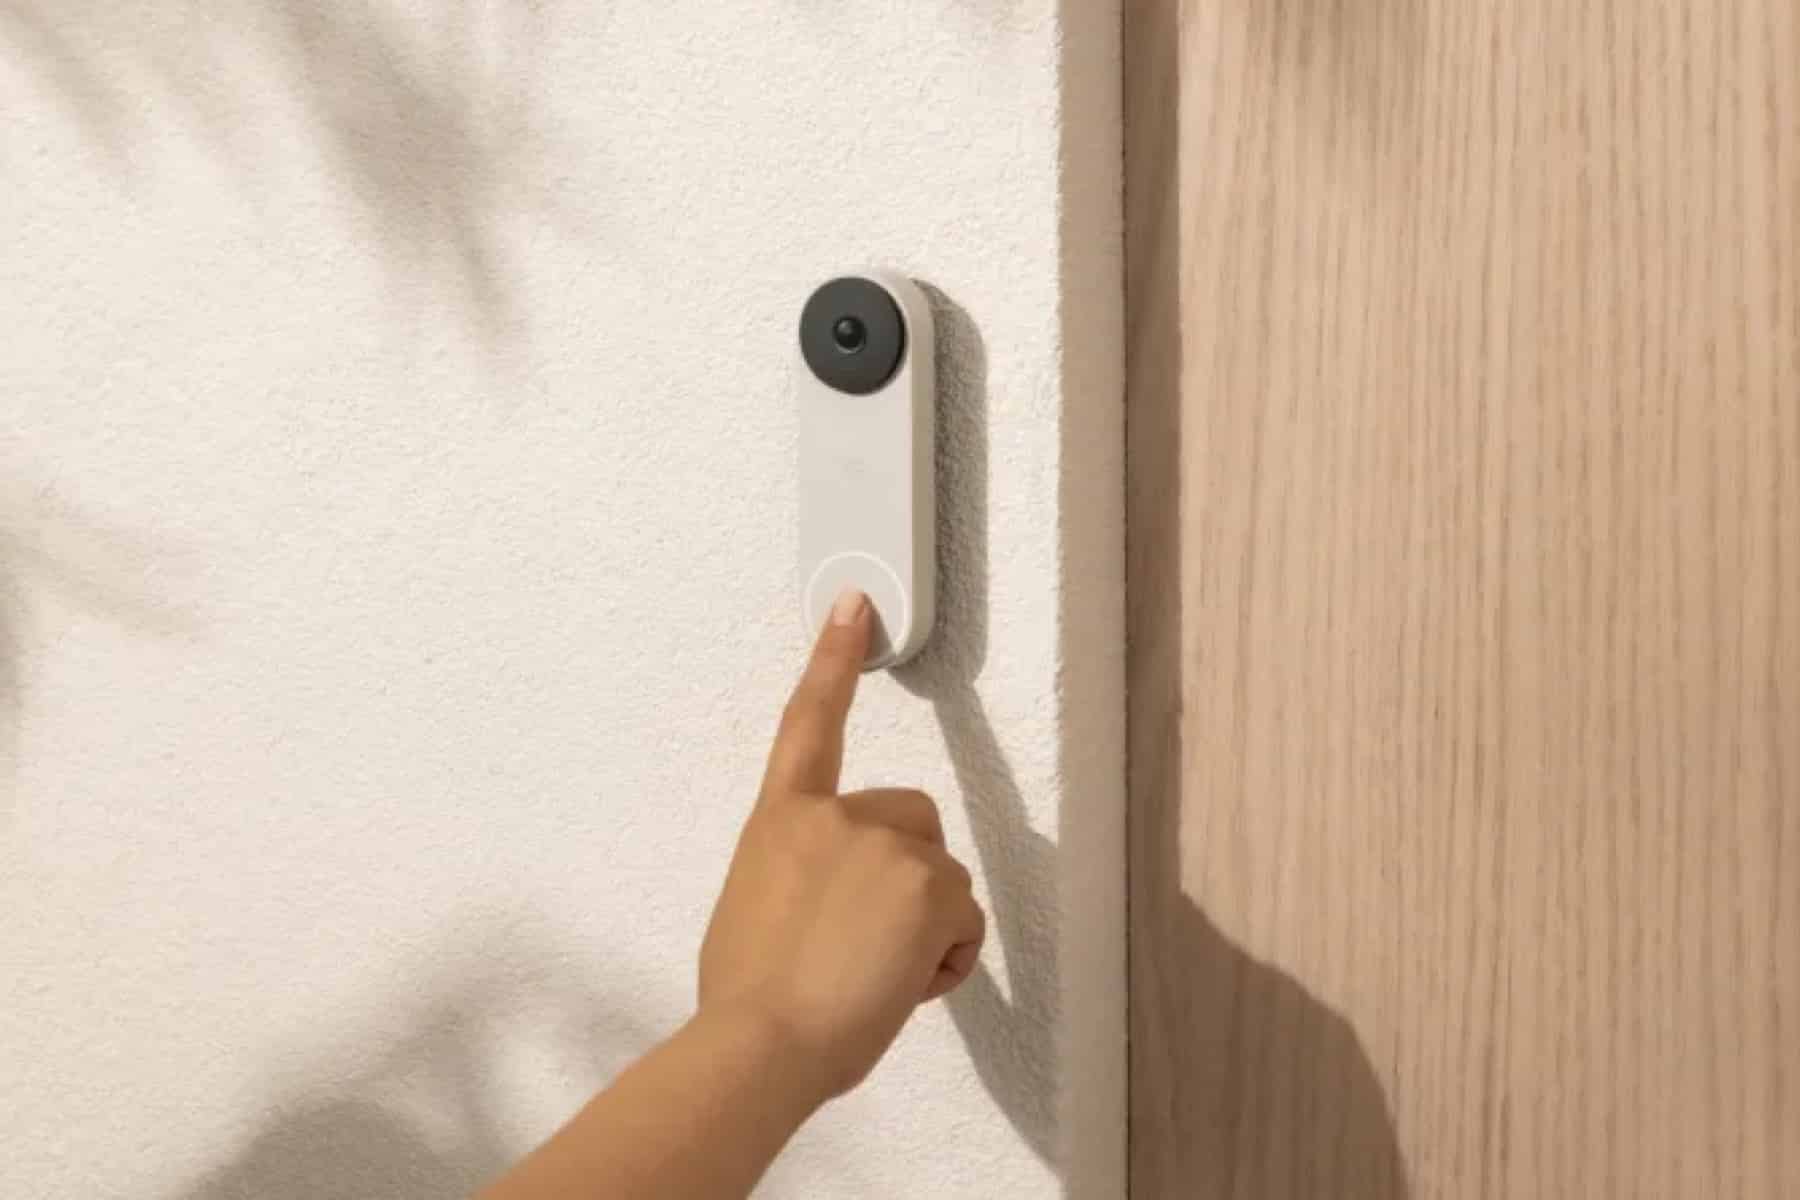 The 2nd generation Google Nest Doorbell has been released in the US